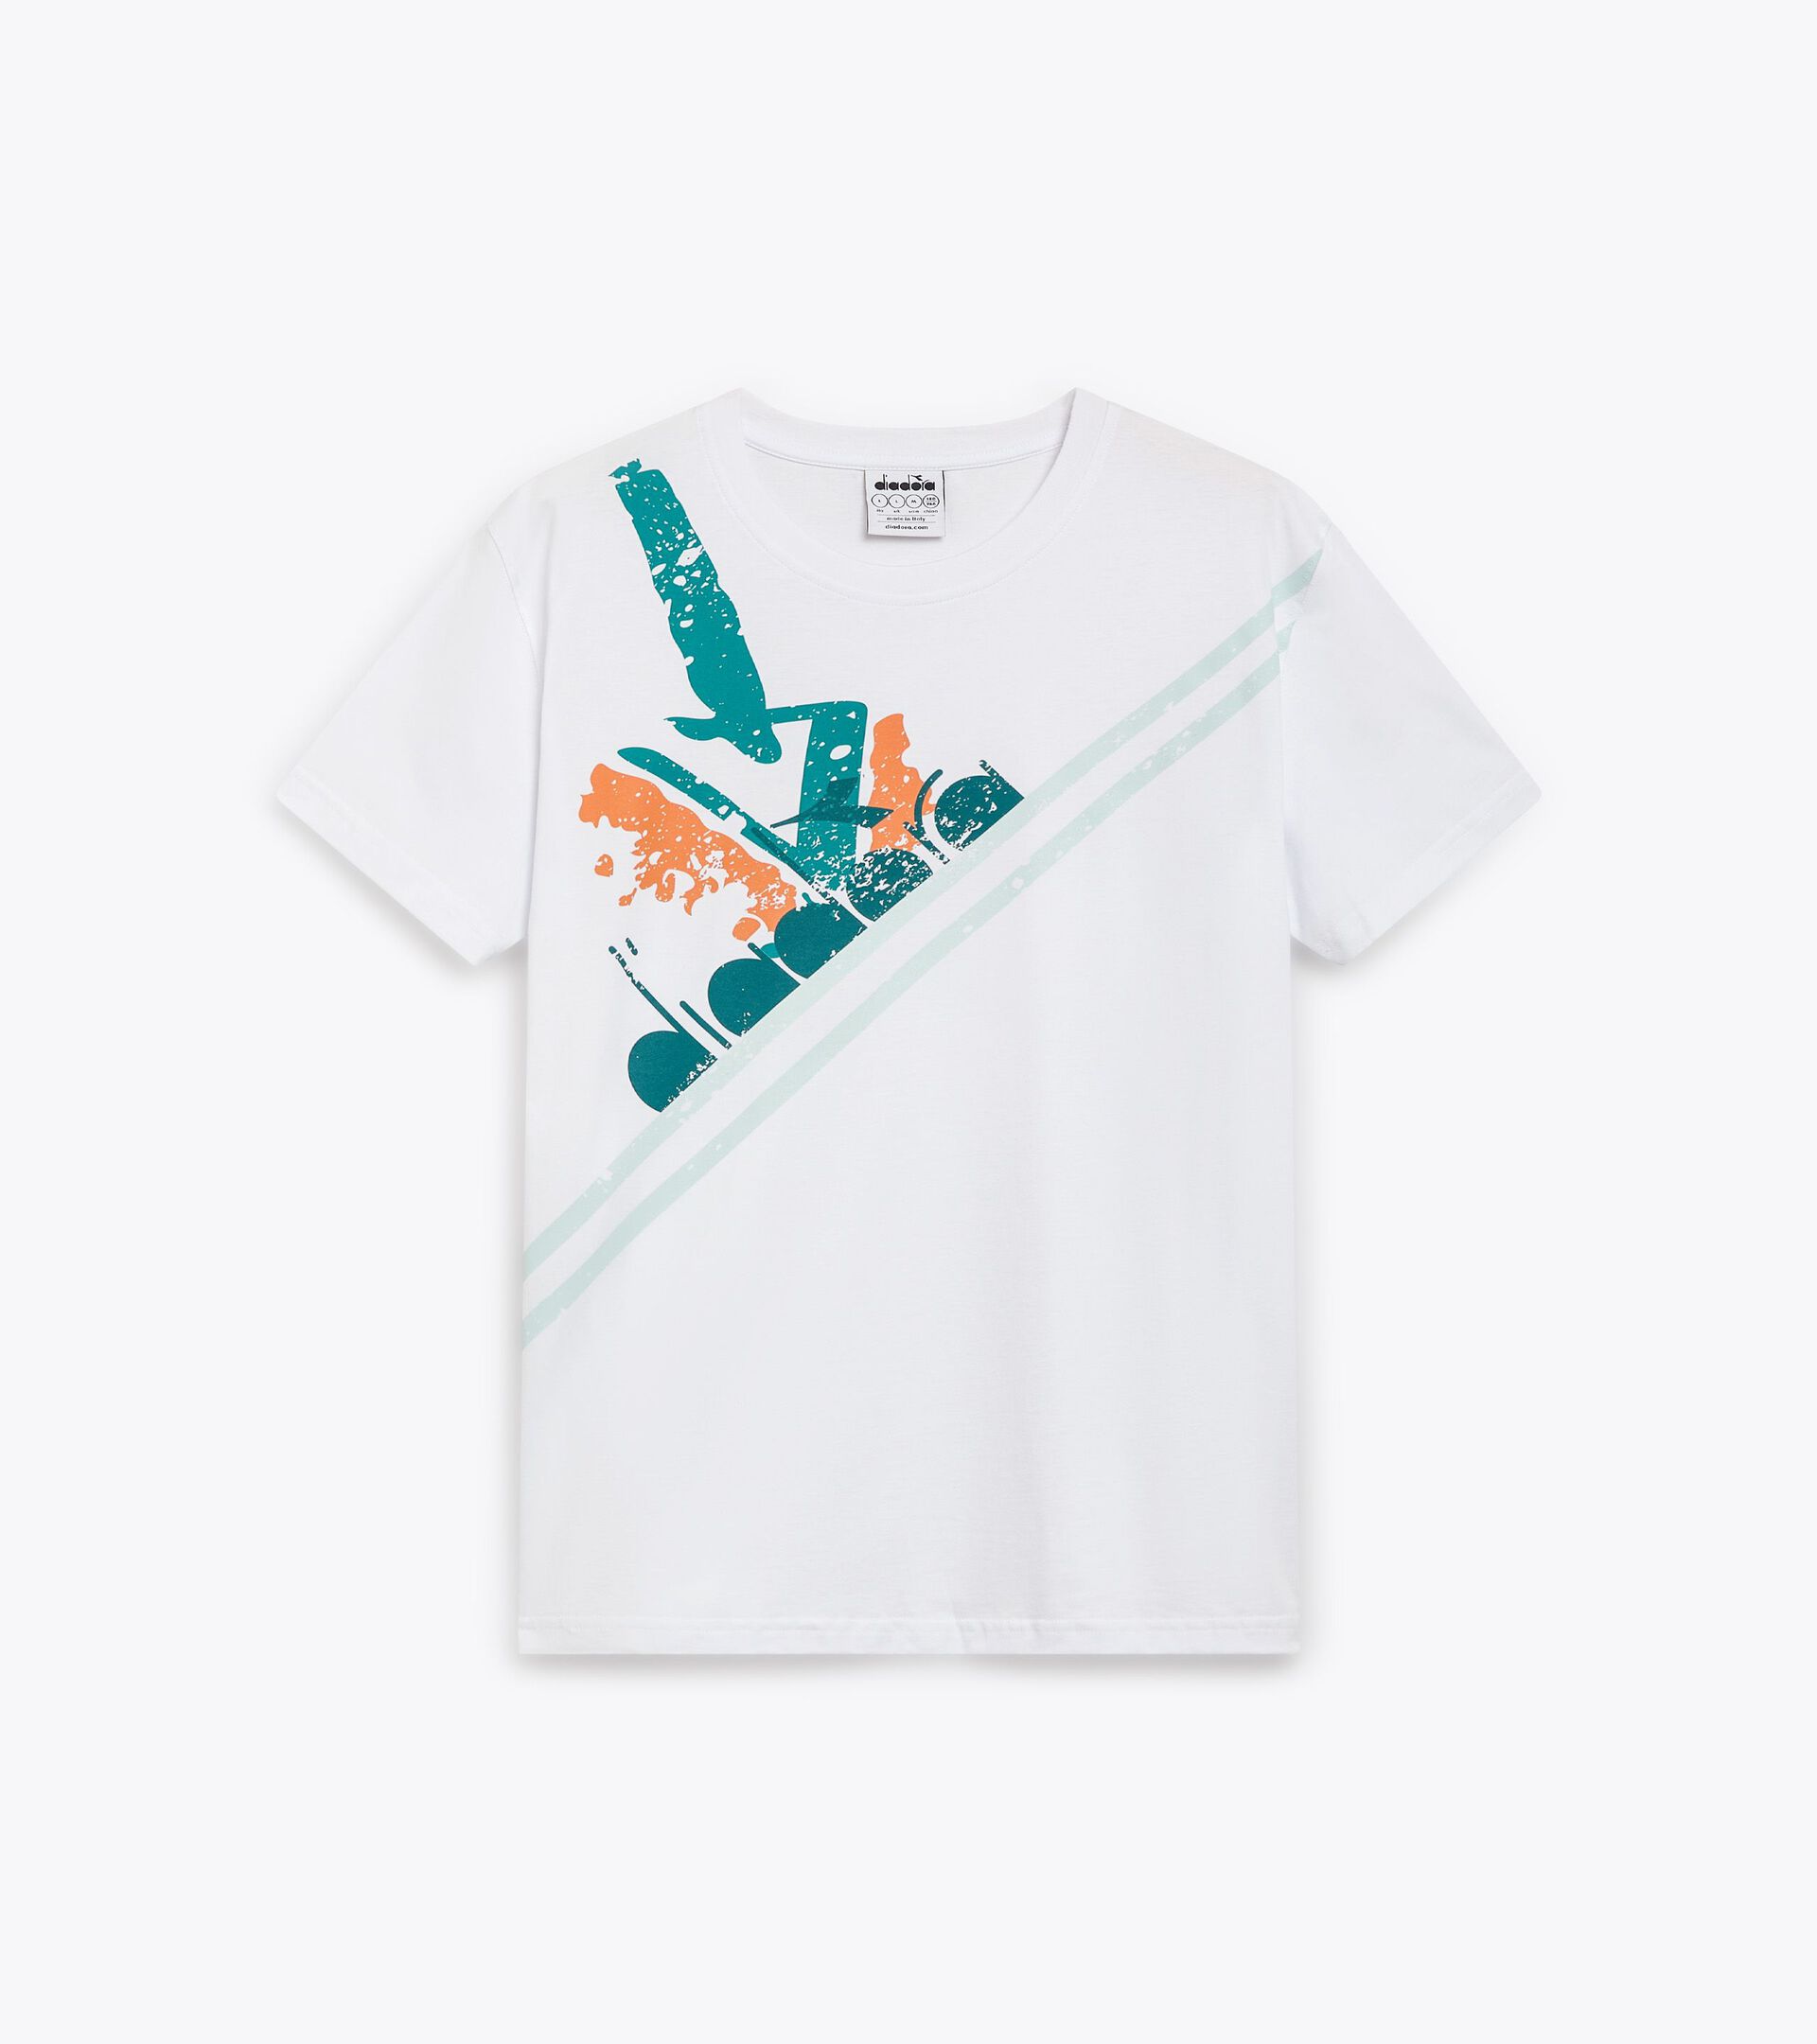 90s-inspired t-shirt - Made in Italy - Men’s T-SHIRT SS TENNIS 90 CAPRI BLUE GREEN - Diadora